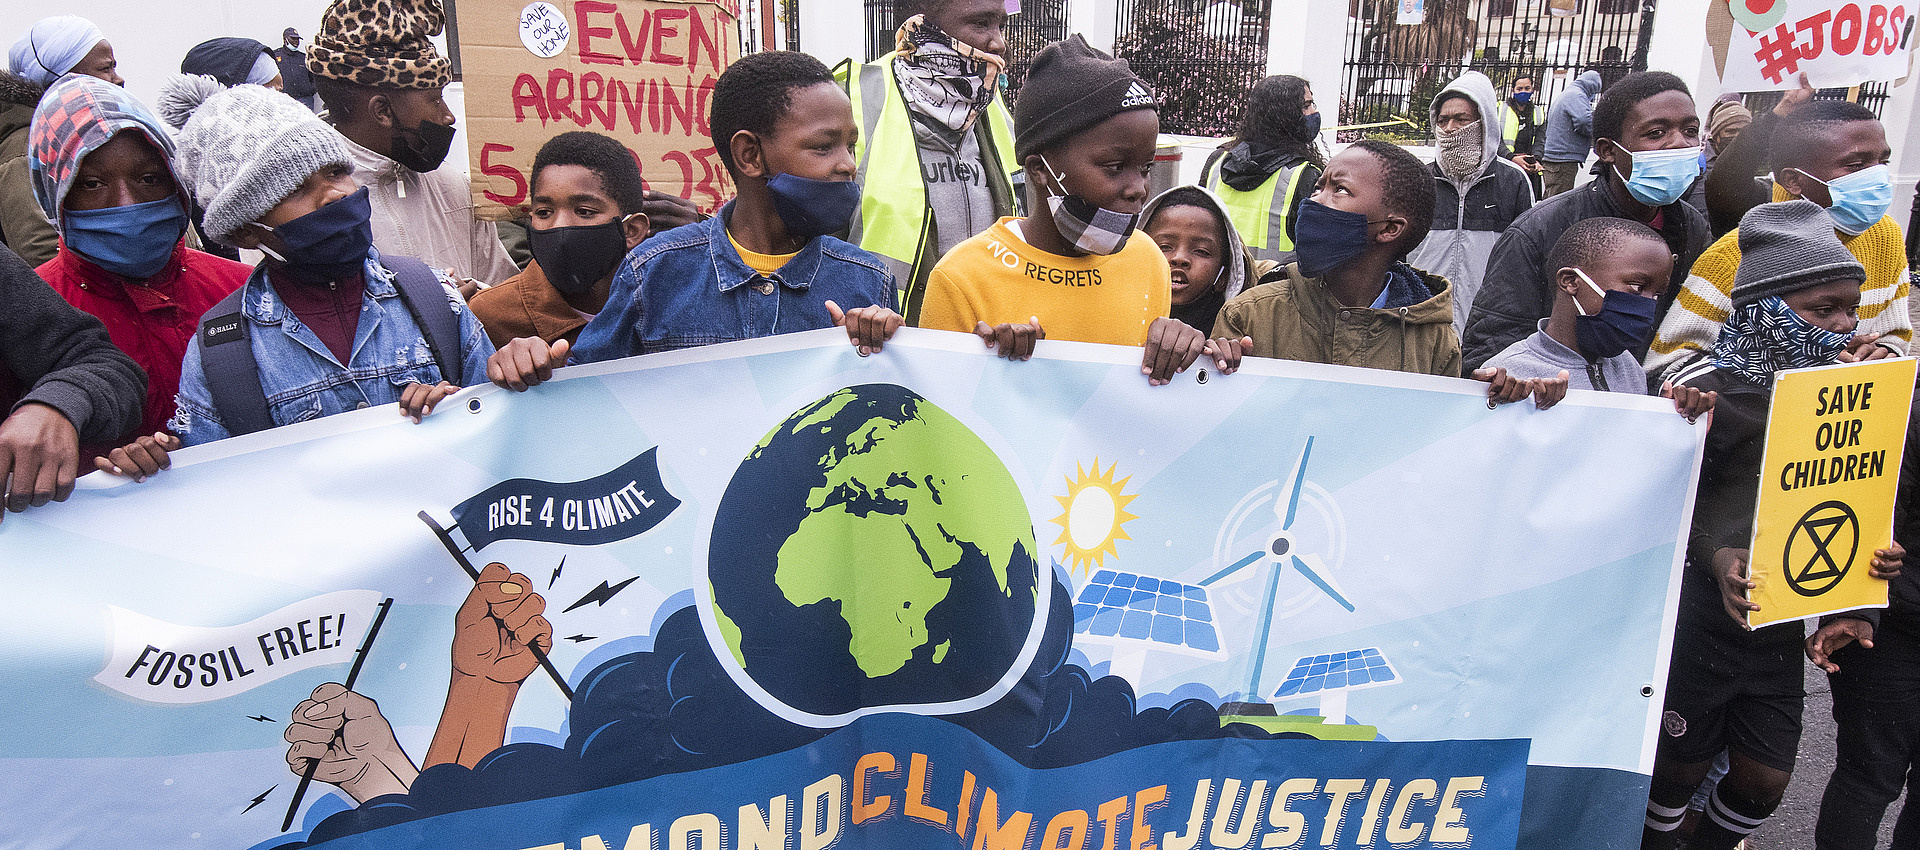 Klimademonsstration in Kapstadt, Südafrika